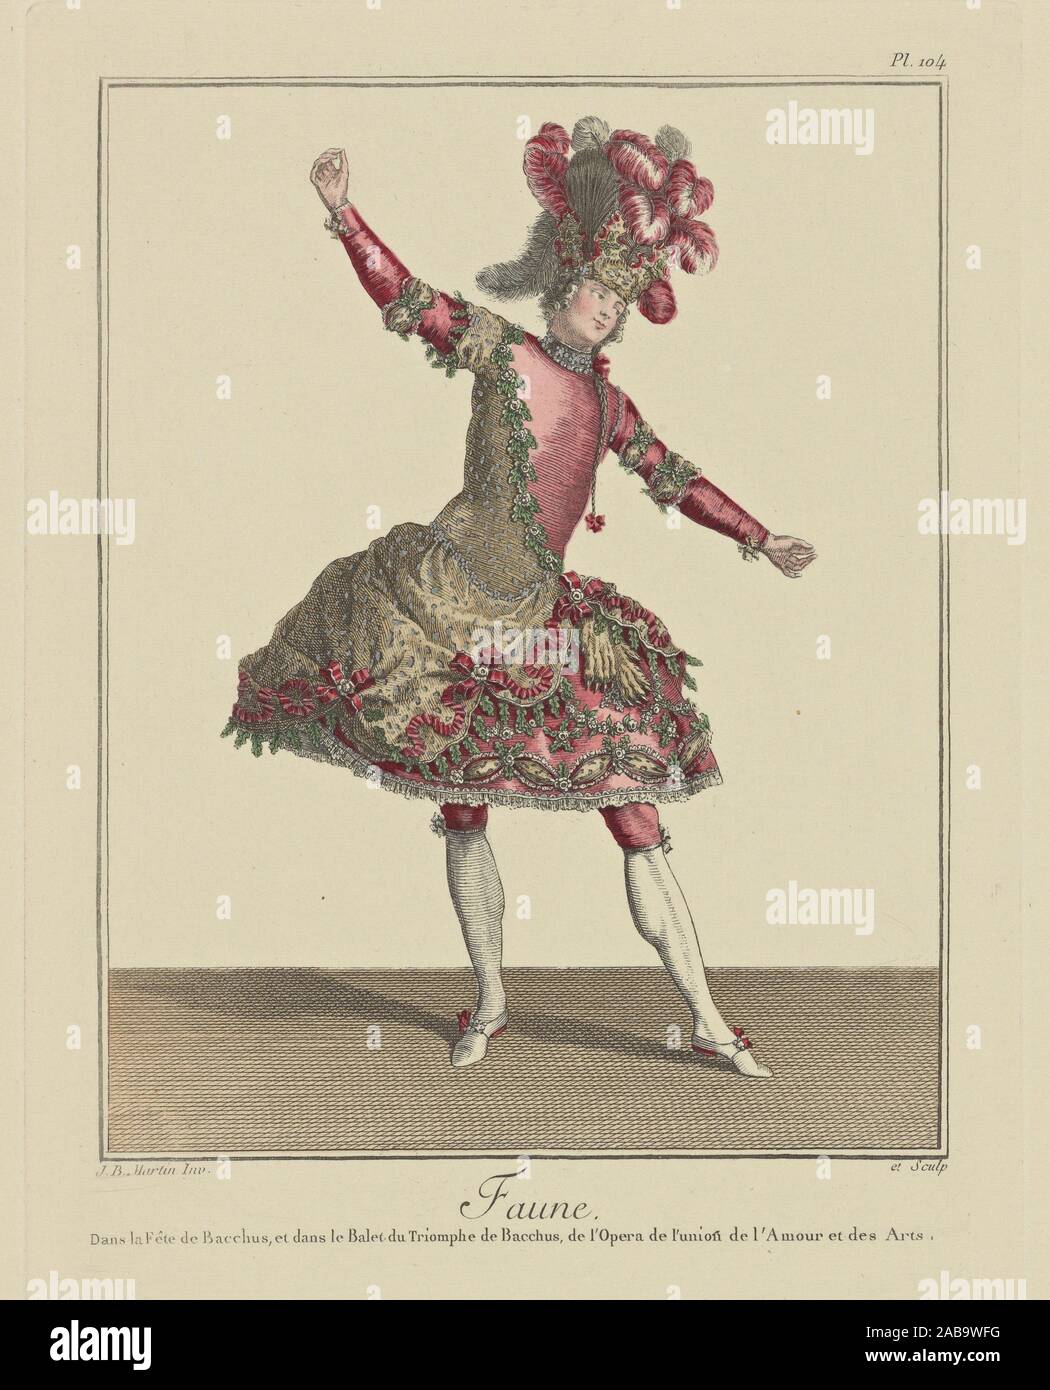 En stock contemporaine lyrique robe aquarelle swirl danse costume